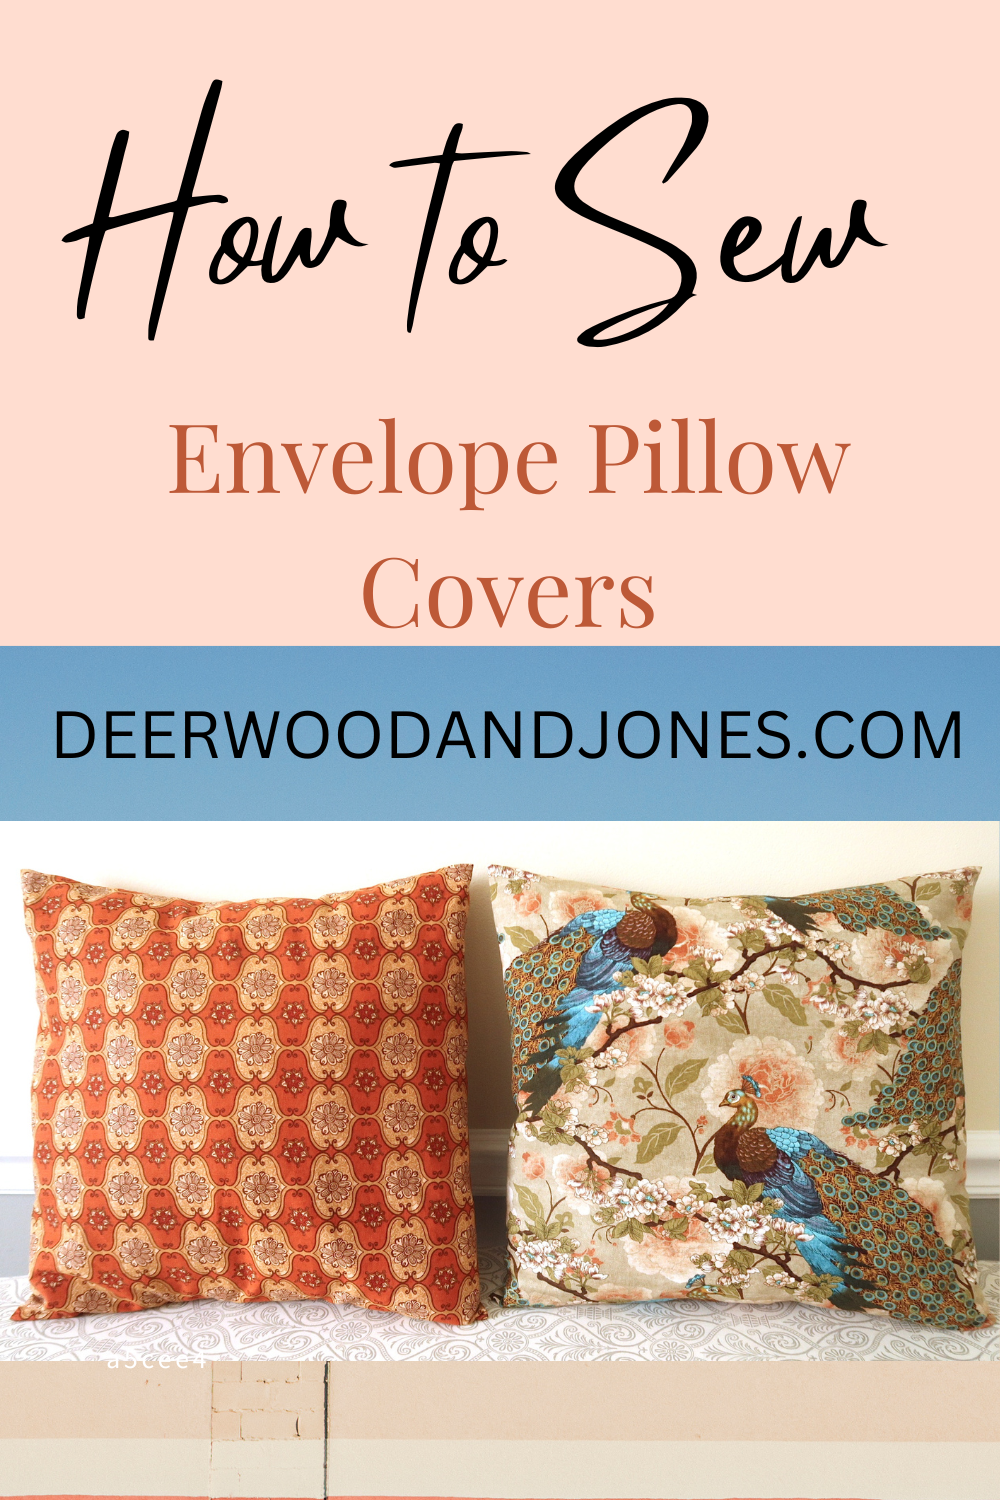 how to sew envelope pillow covers deerwoodandjones.com two pillows